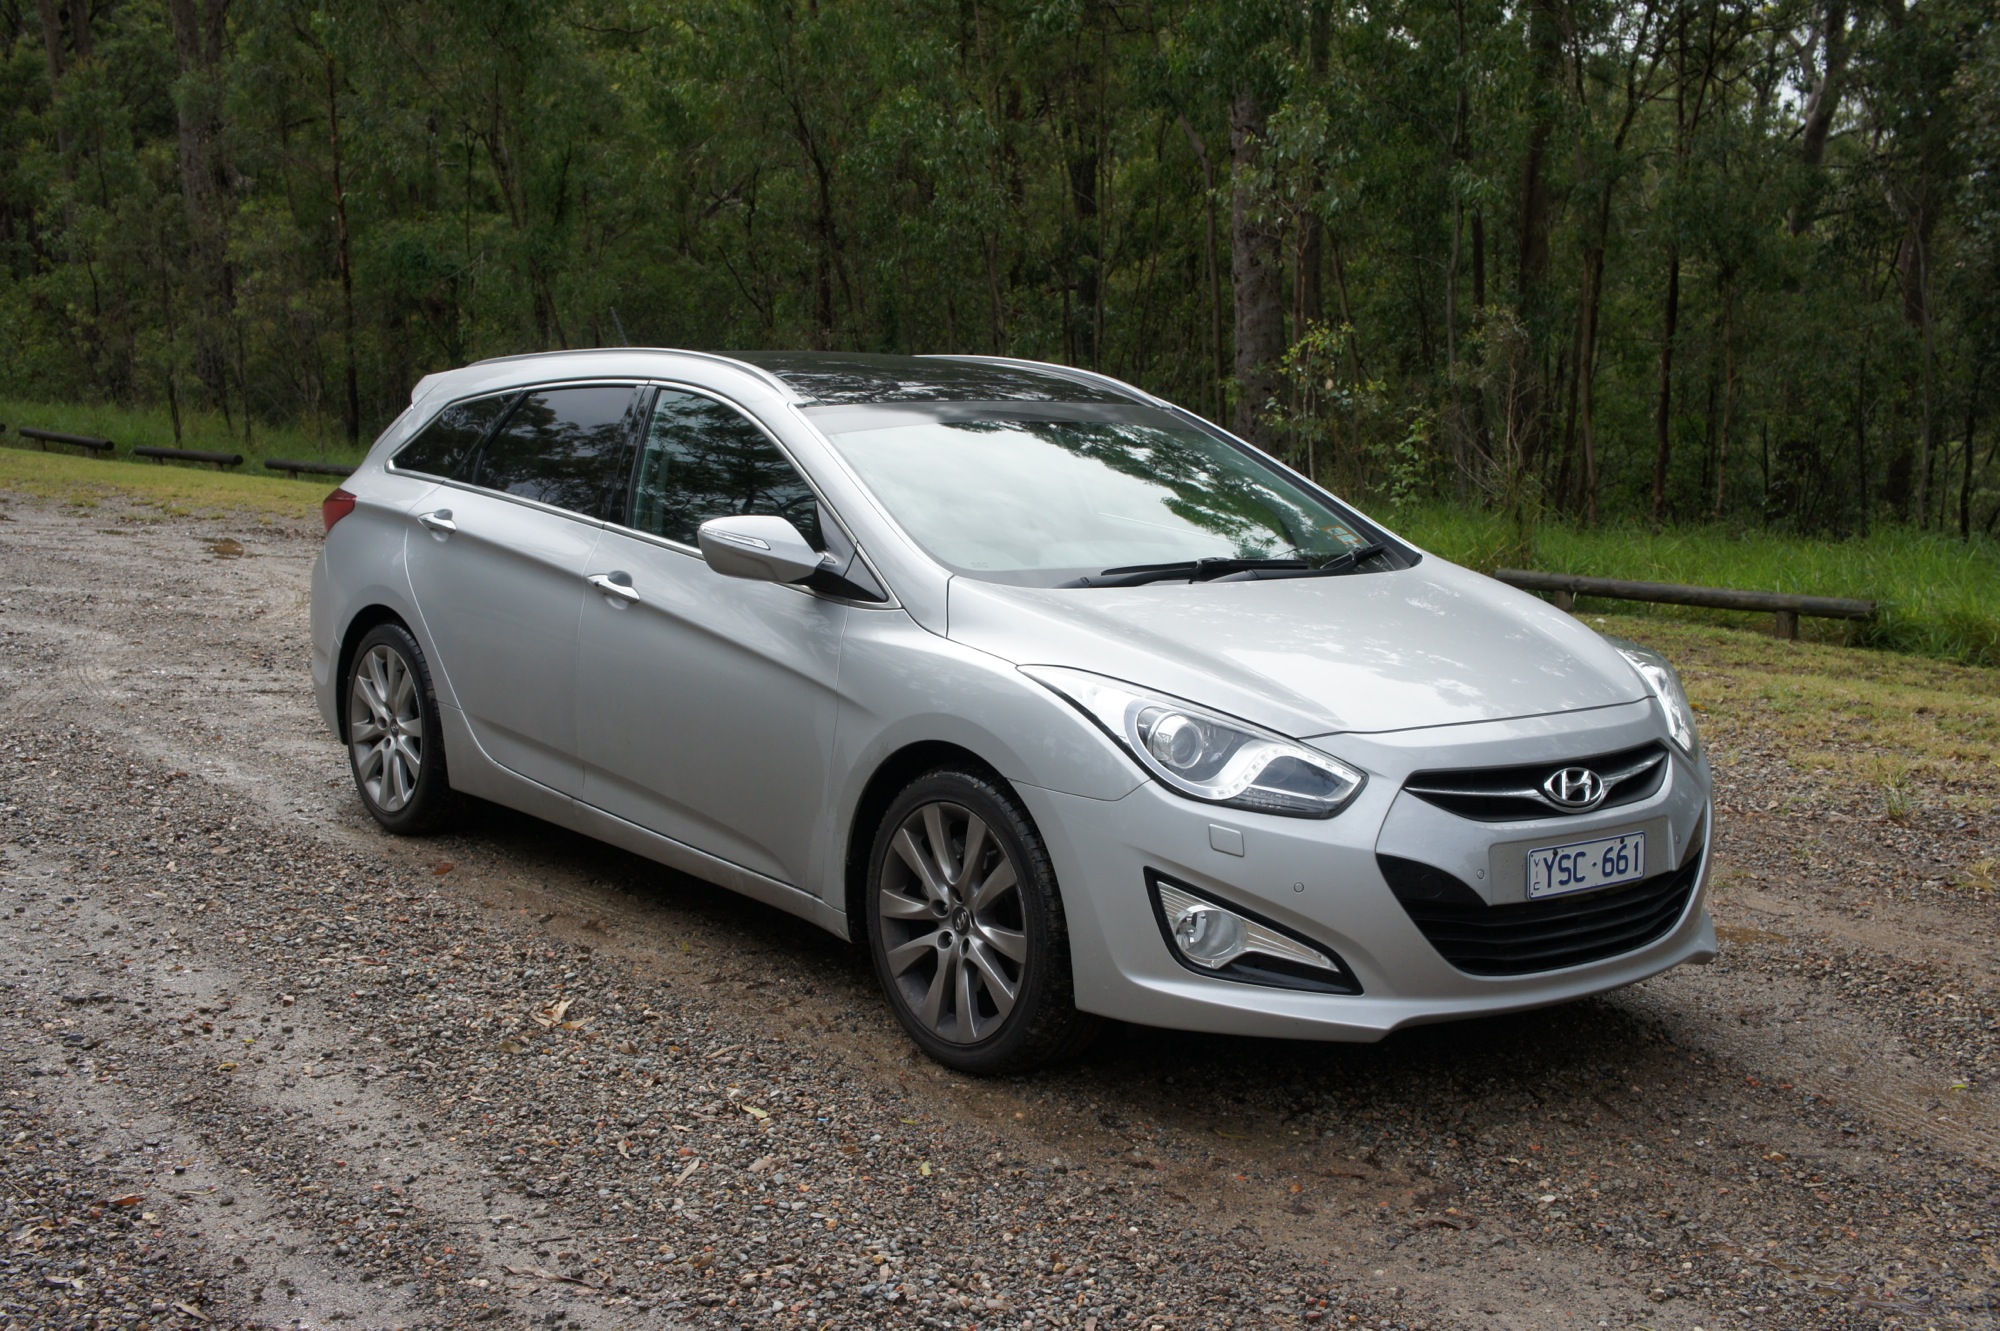 Hyundai i40 review long term report 3 CarAdvice